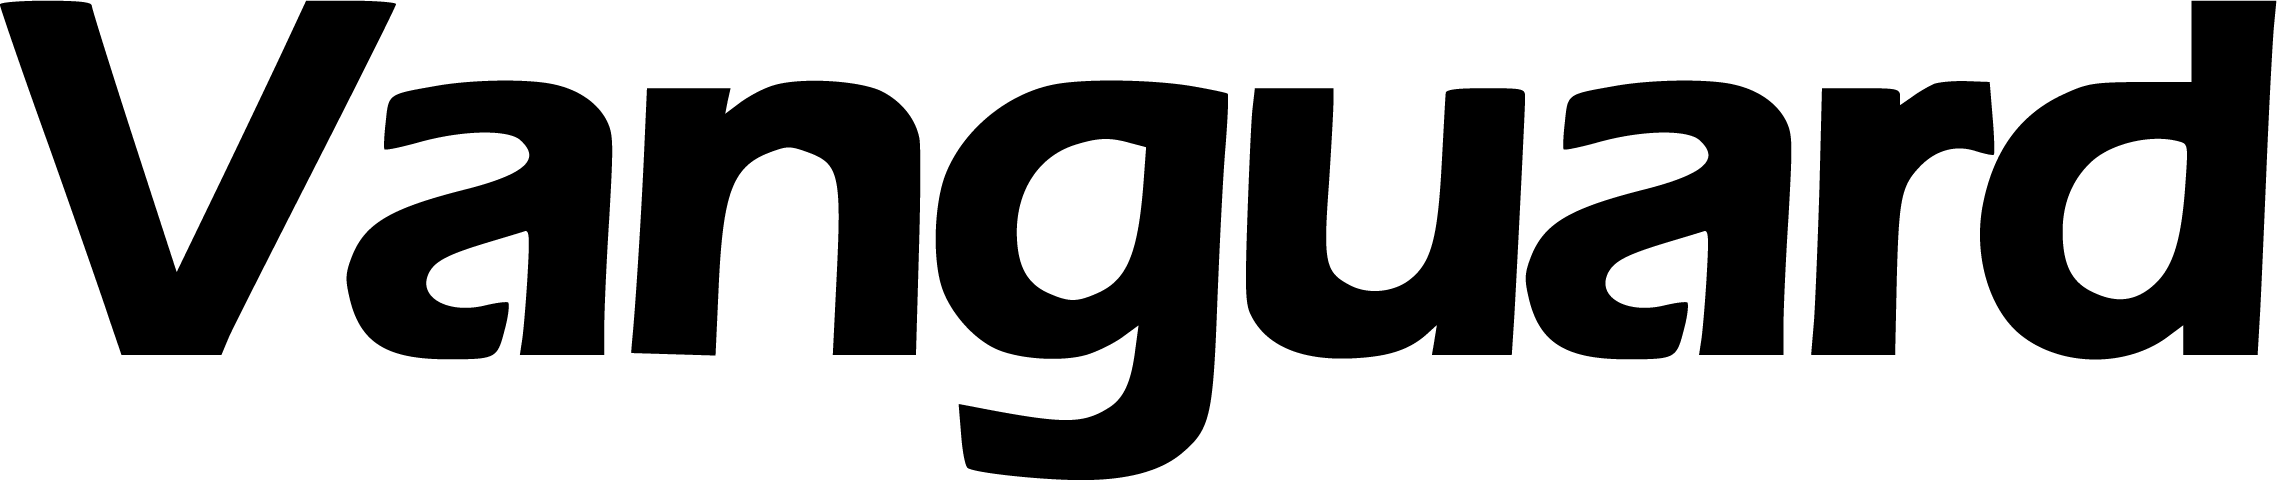 vanguardngr-logo